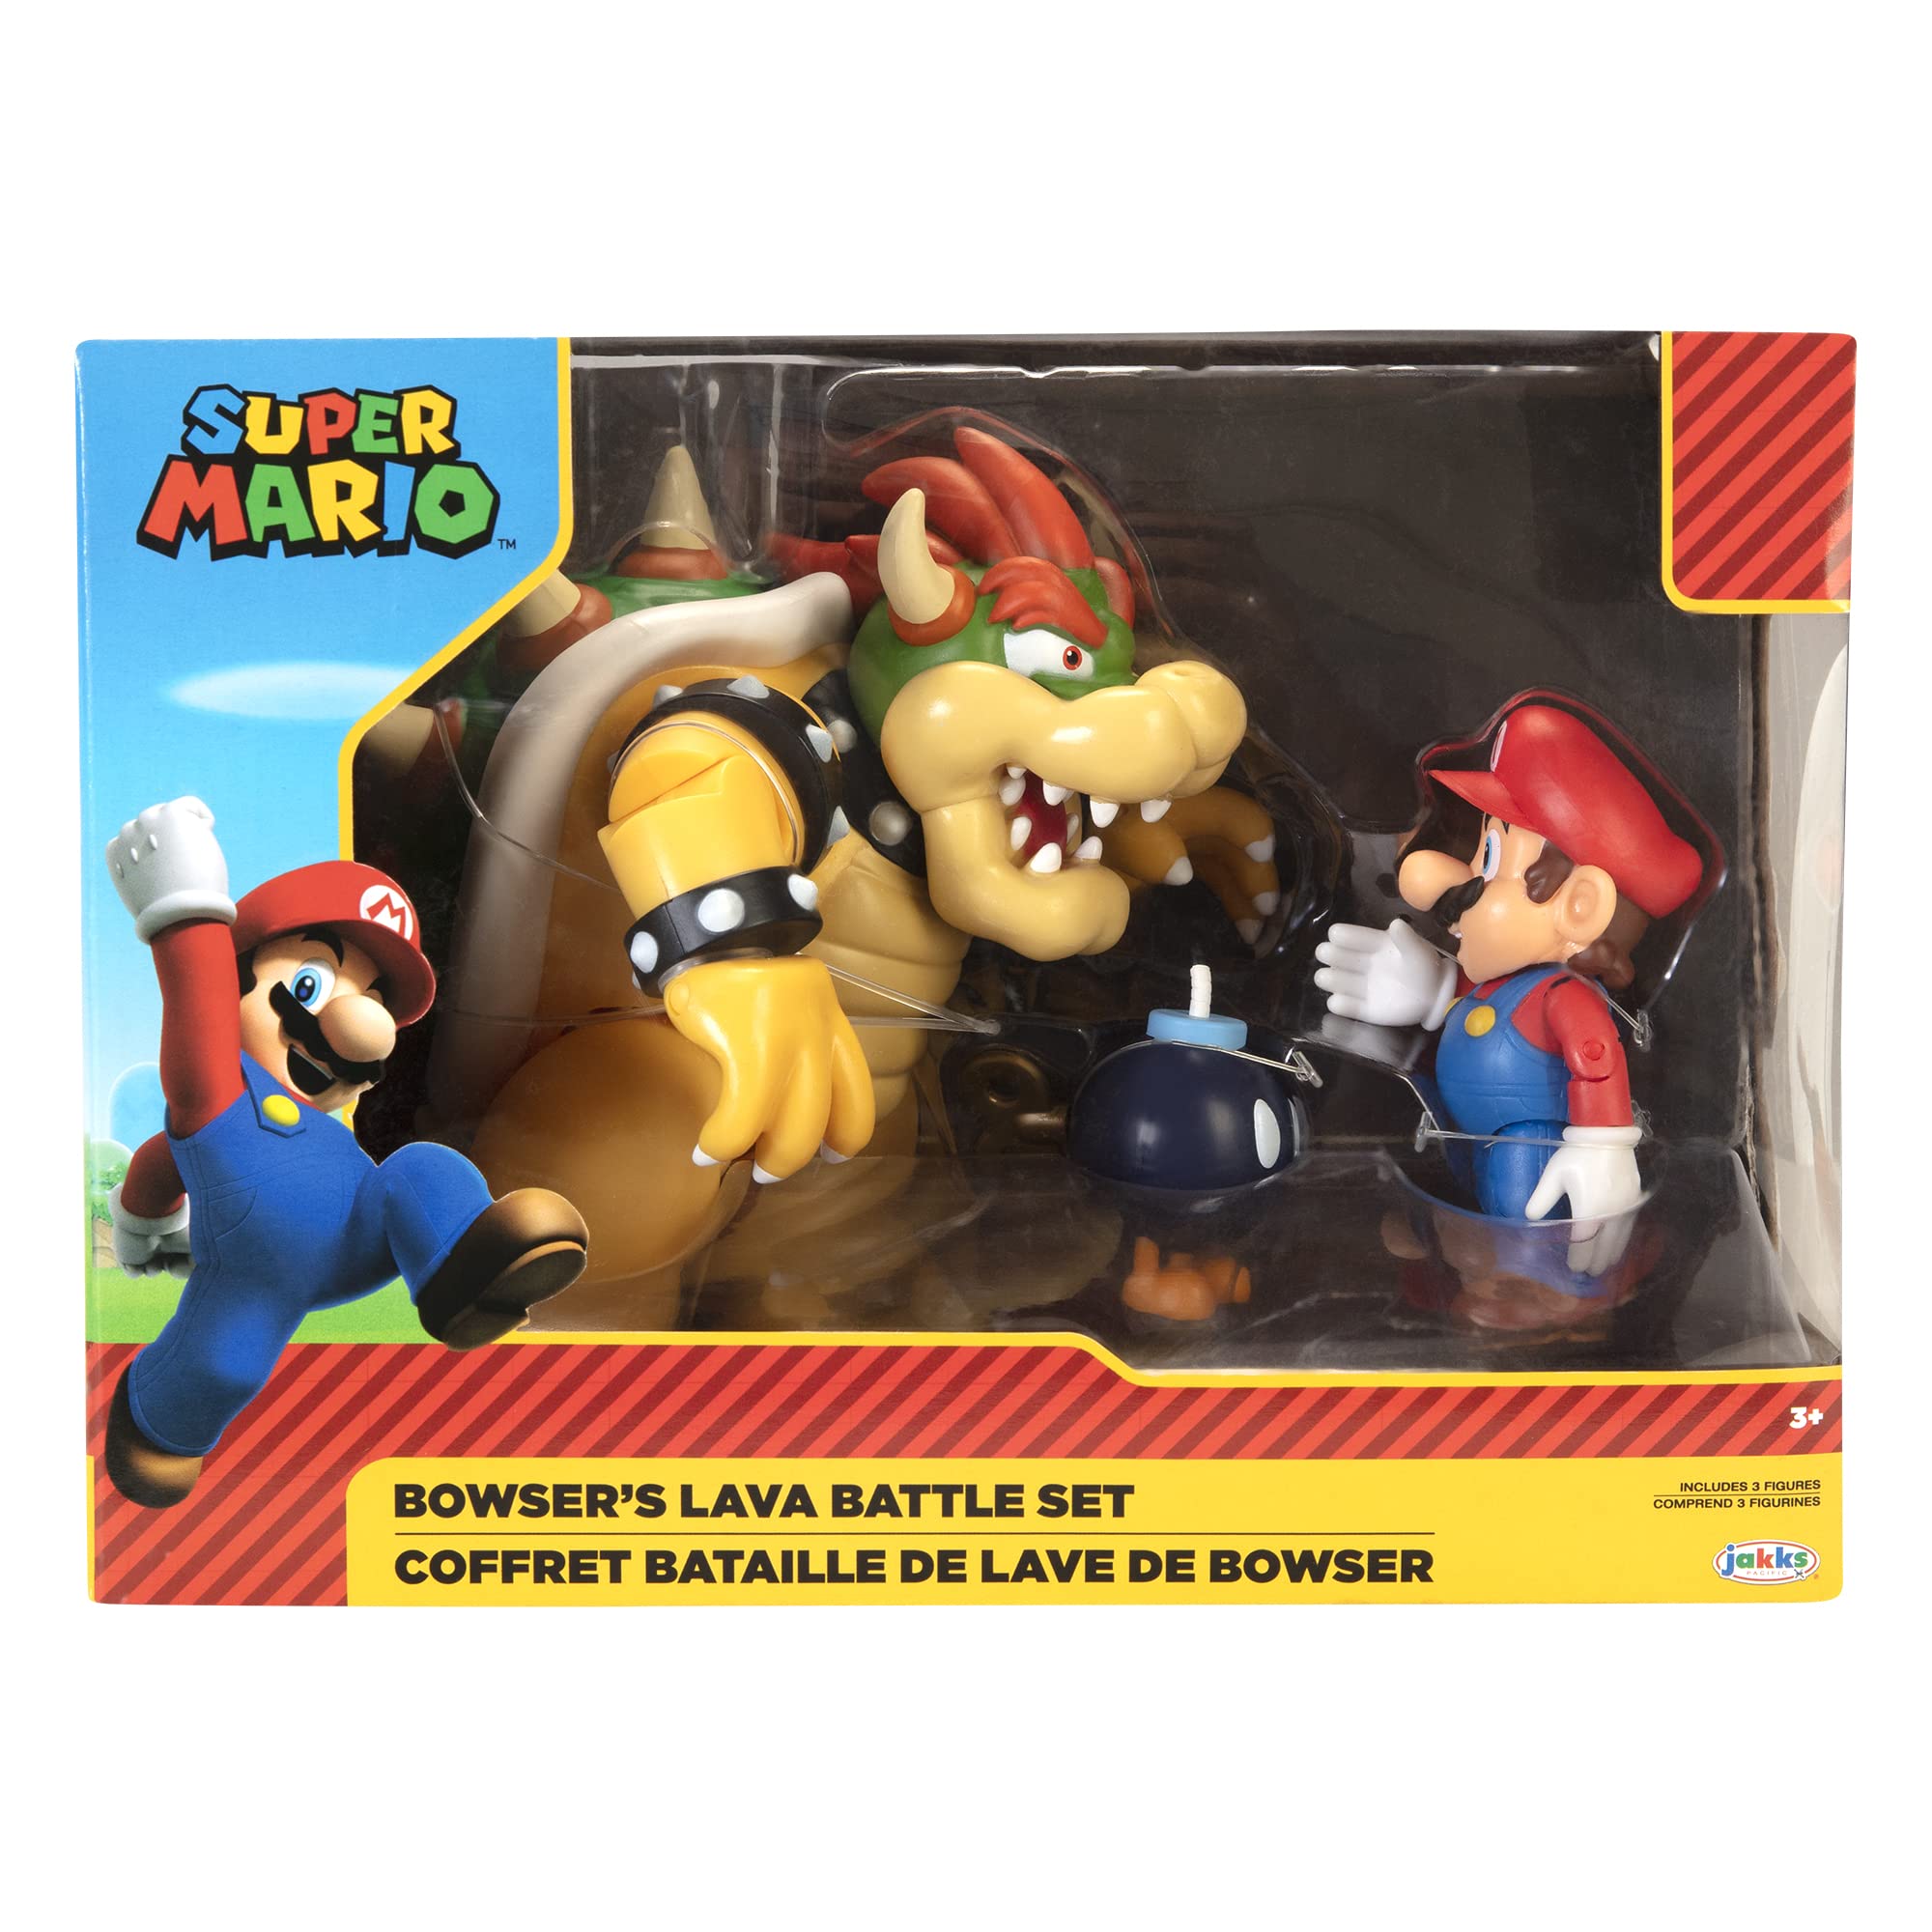 World of Nintendo Super Mario, Bowser, BOB - OMB , Figure (3 Pack), Bowser Vs Mario Diorama Set - $21.24 - Amazon